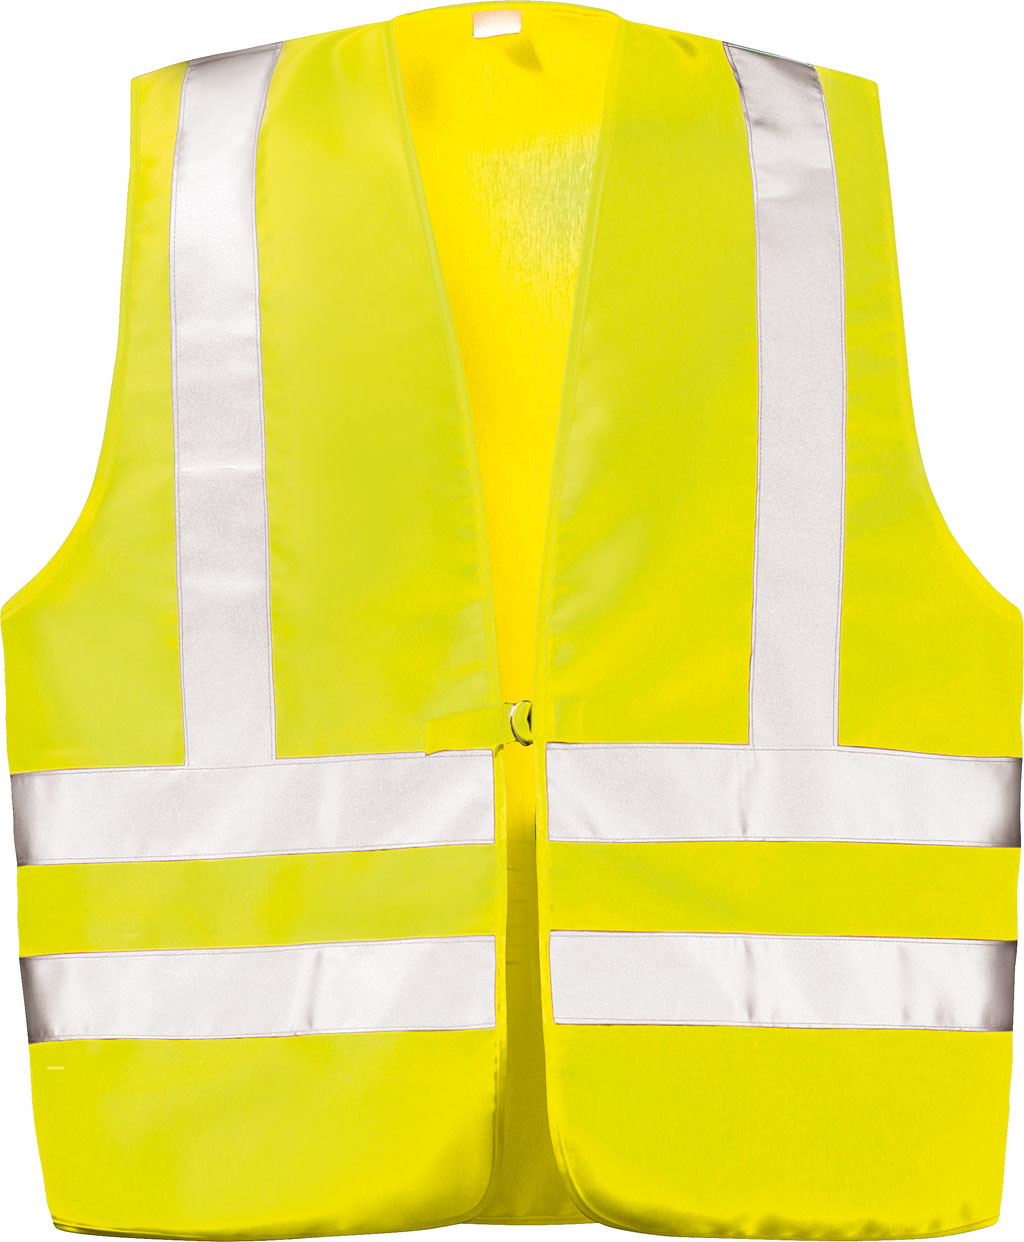 Warnweste fluoreszierend gelb wicaTex® HARALD Warnschutzweste 